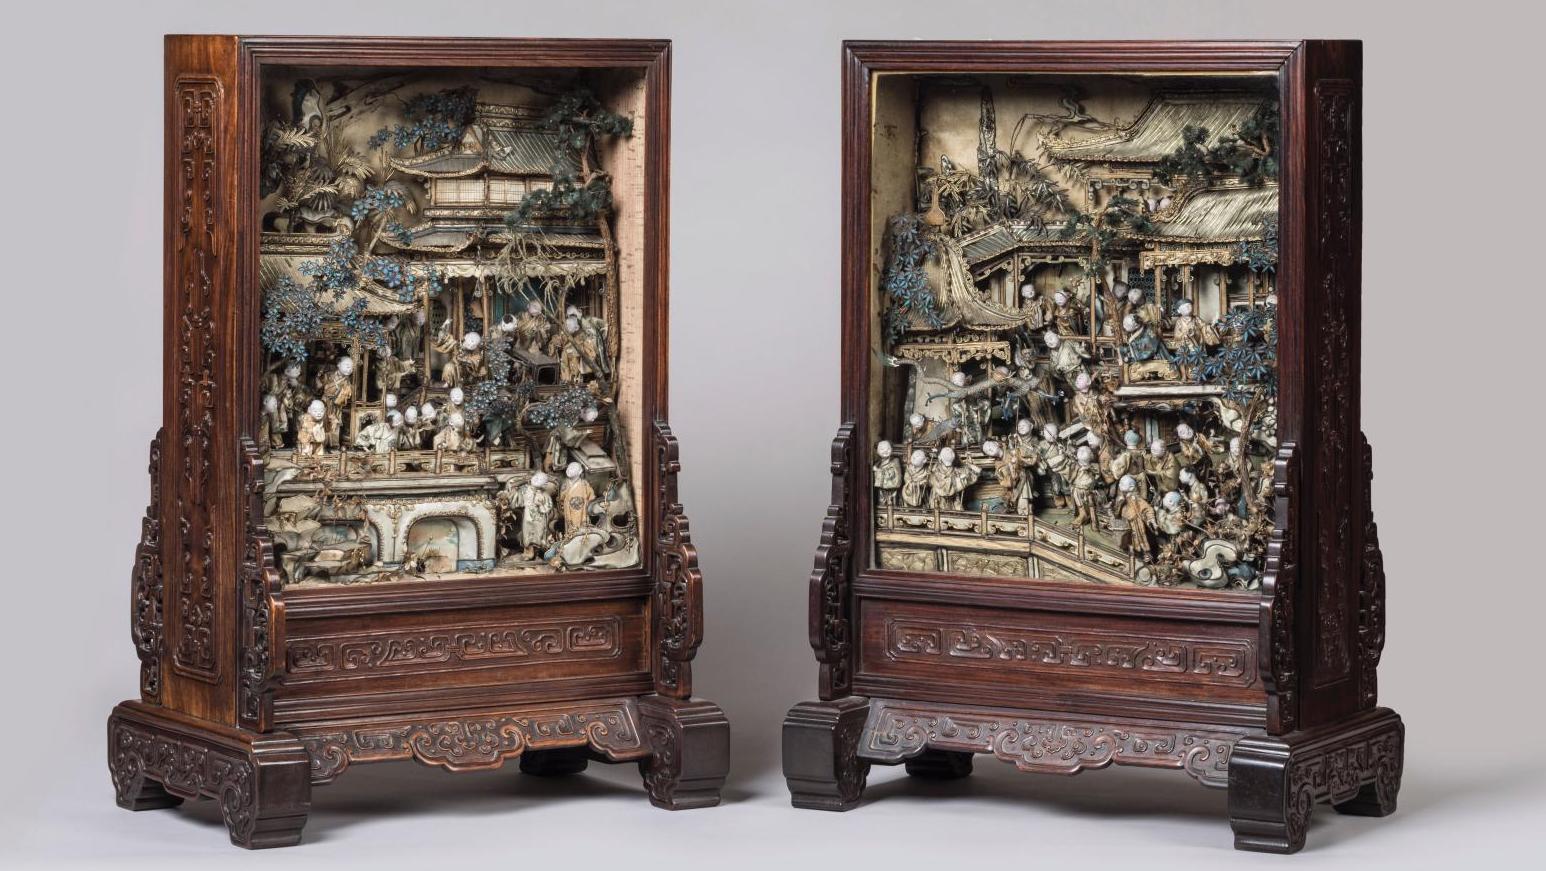 Chine, Canton, fin du XVIIIe siècle. Paire de dioramas en soie polychrome, application... Dioramas chinois de la fin du XVIIIe siècle